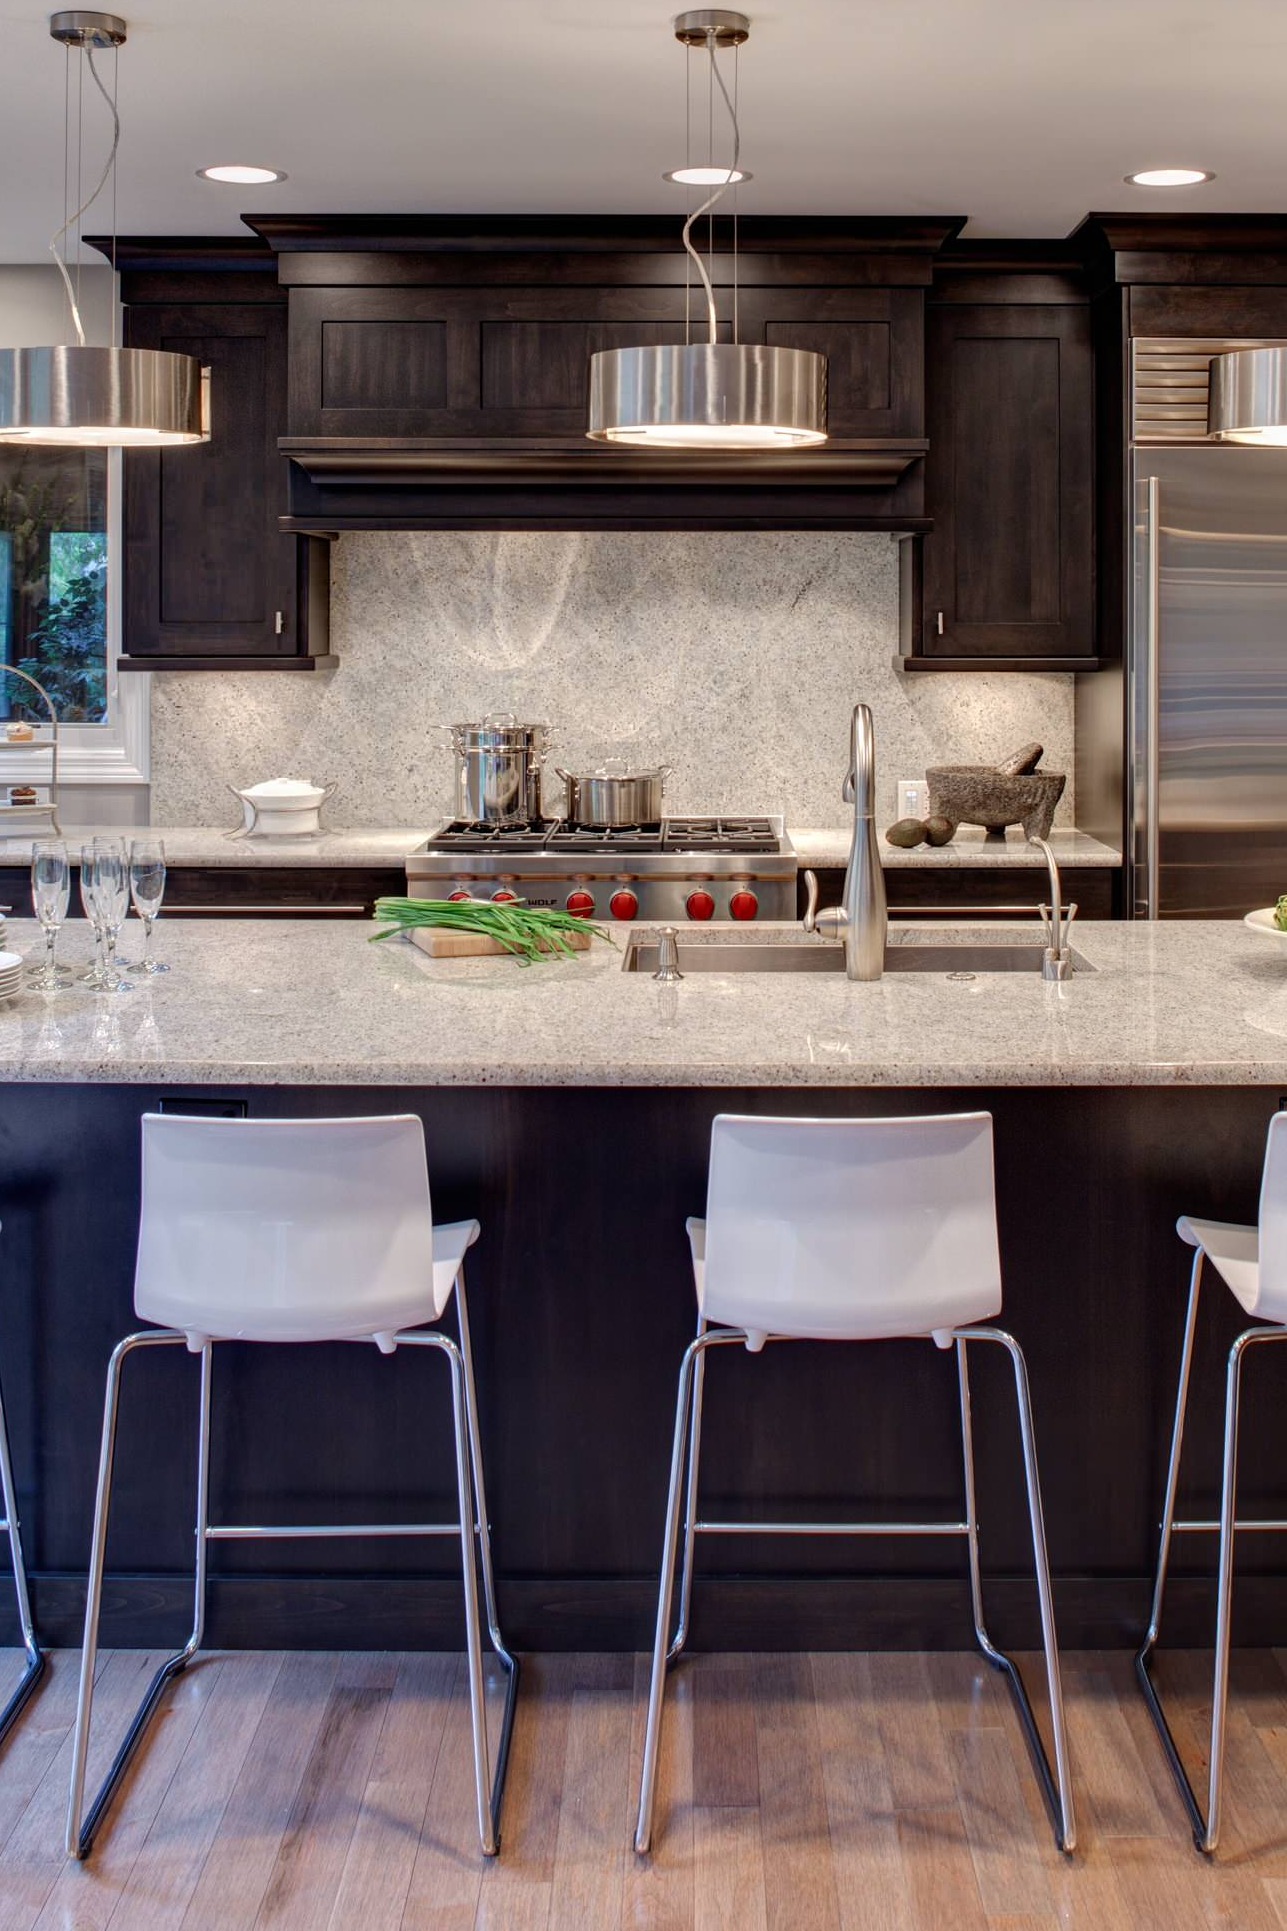 White Ice Granite Countertop Espresso Dark Cabinet Full Height Backsplash Hardwood Floor